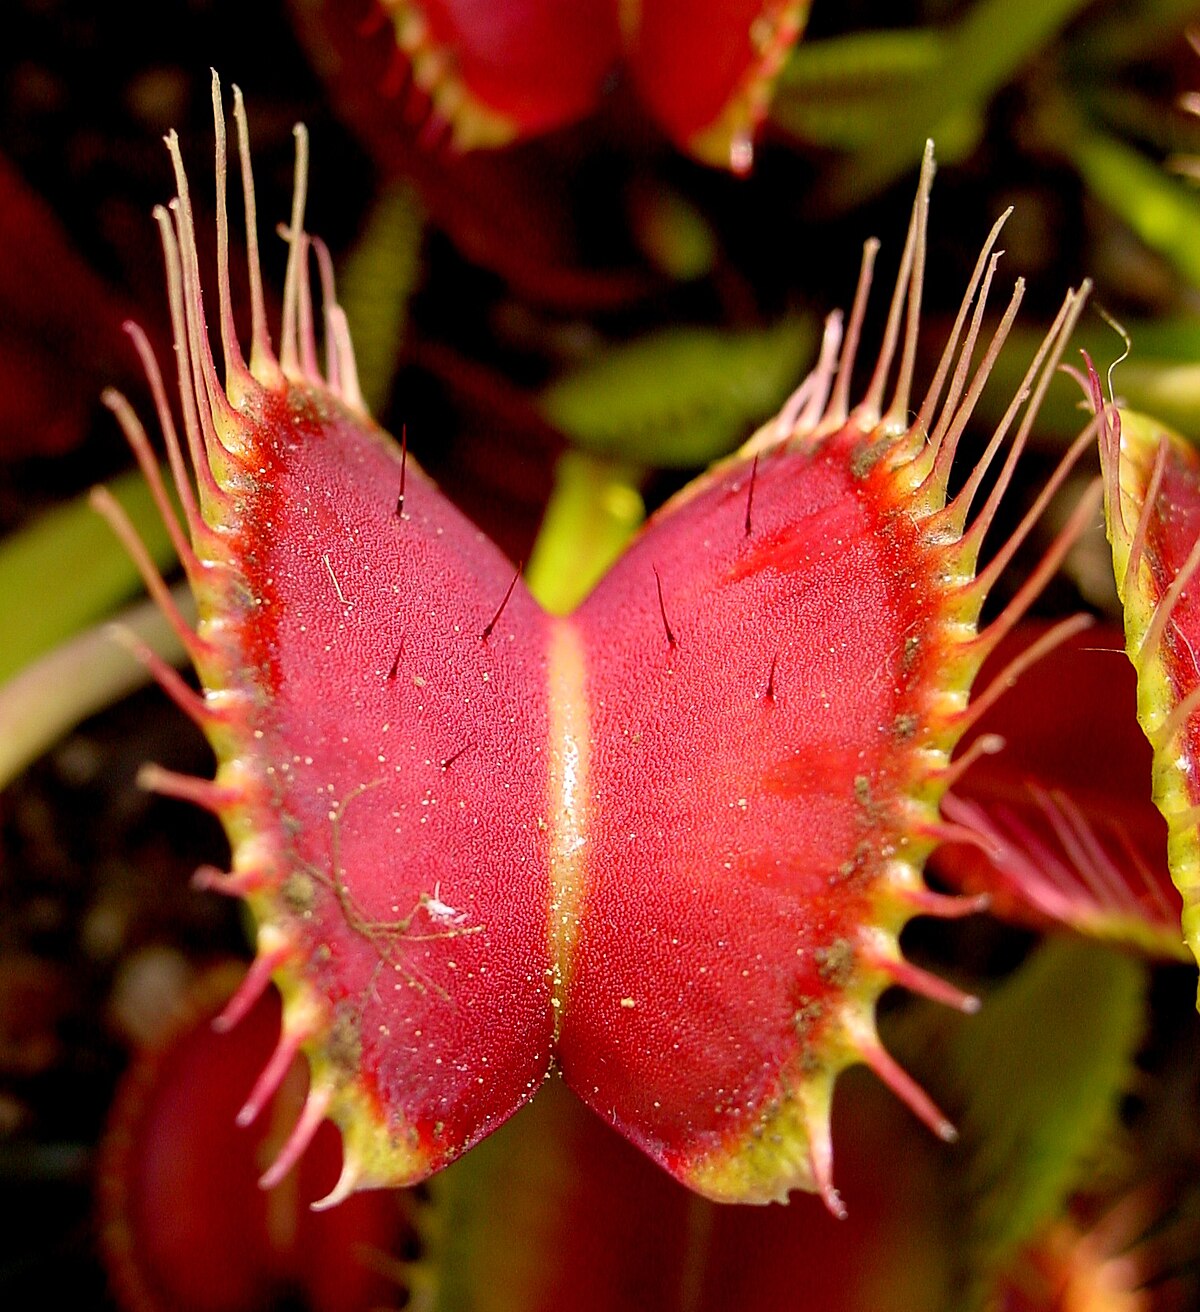 Venus flytrap   Wikipedia